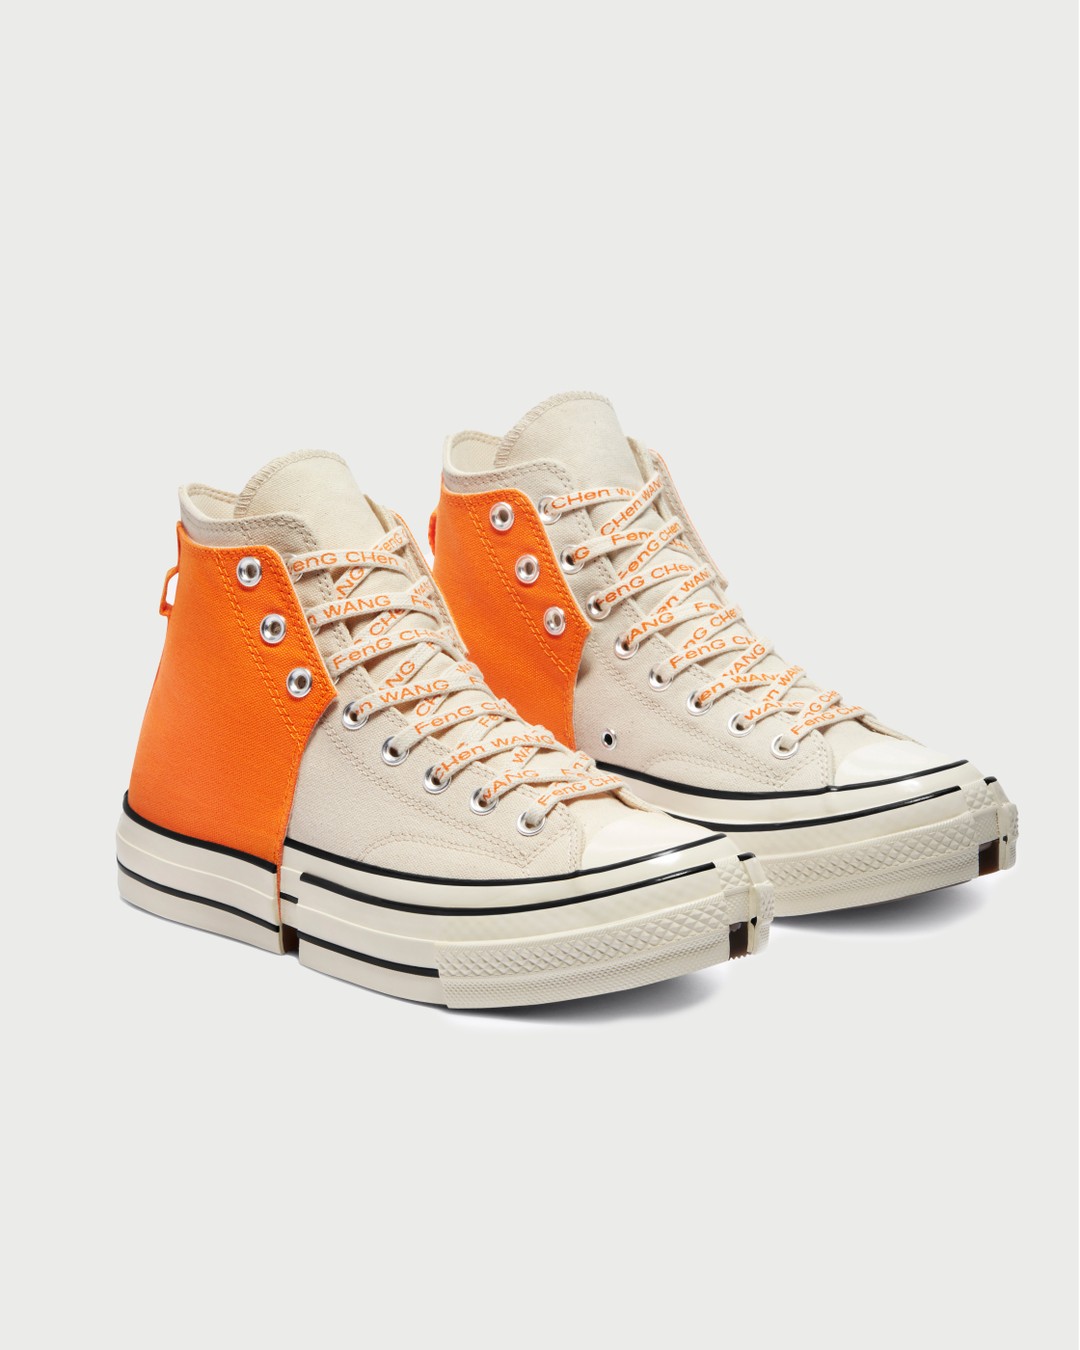 Converse x Feng Chen Wang – 2-in-1 Chuck 70 High Persimmon Orange - Sneakers - Orange - Image 2